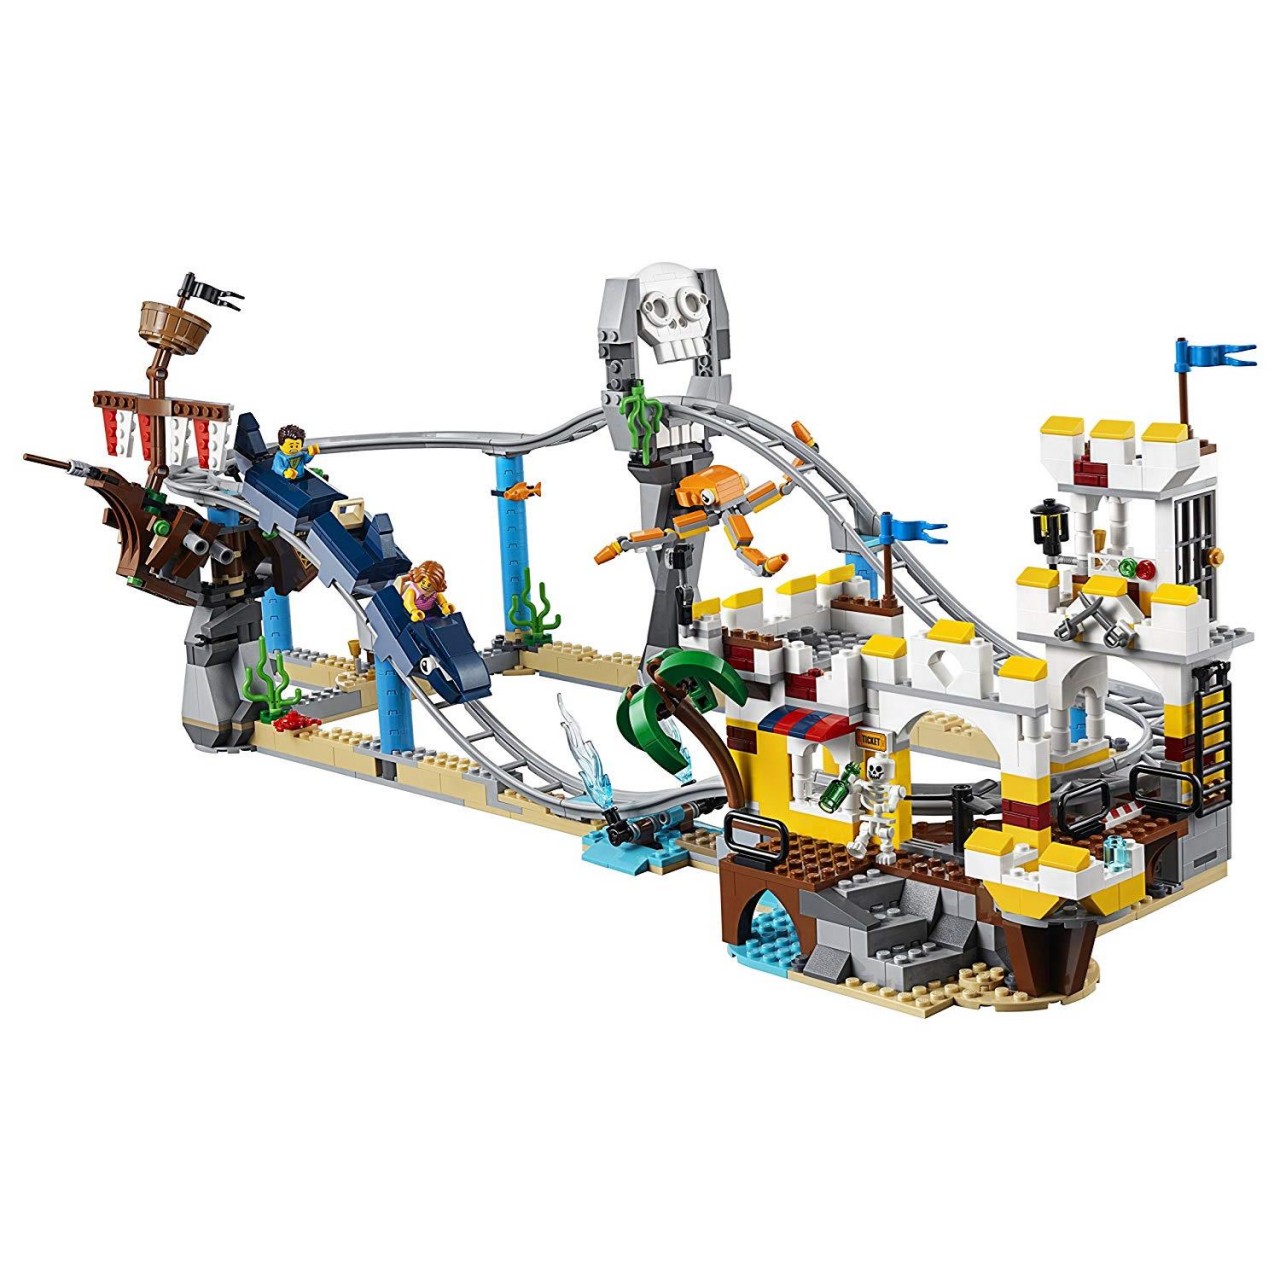 LEGO CREATOR 31084 Piraten Achterbahn